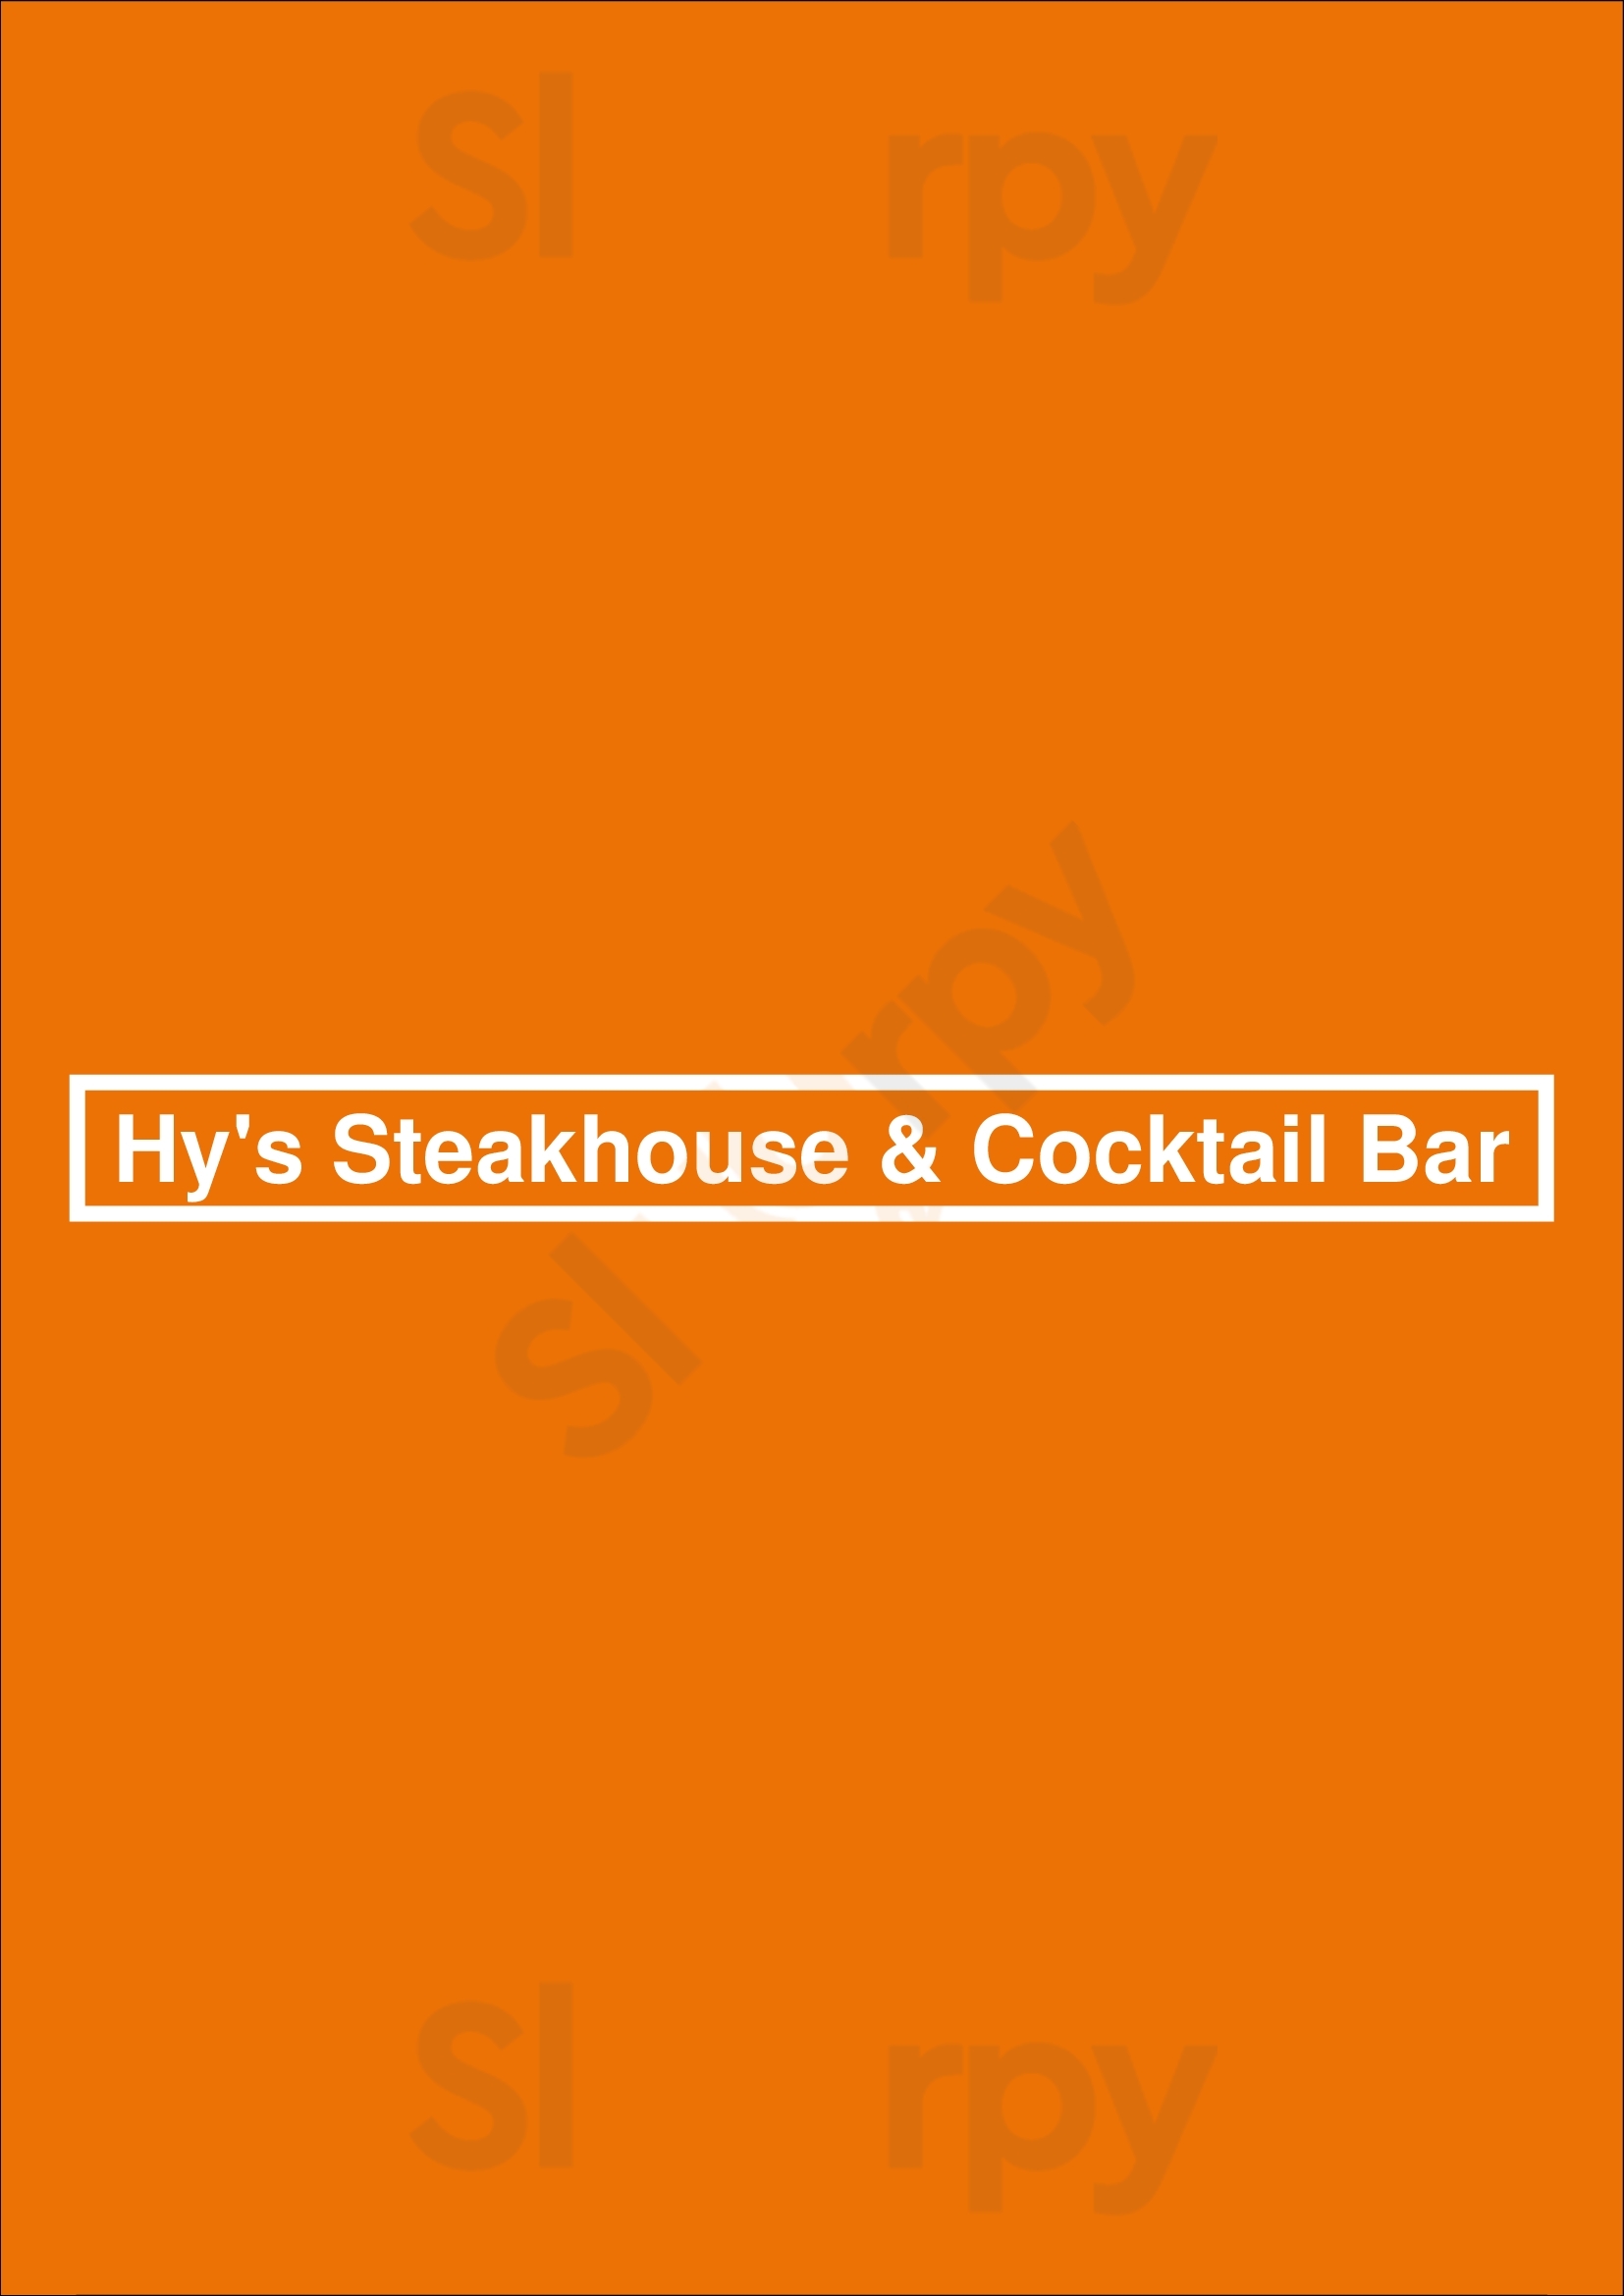 Hy's Steakhouse & Cocktail Bar Vancouver Vancouver Menu - 1